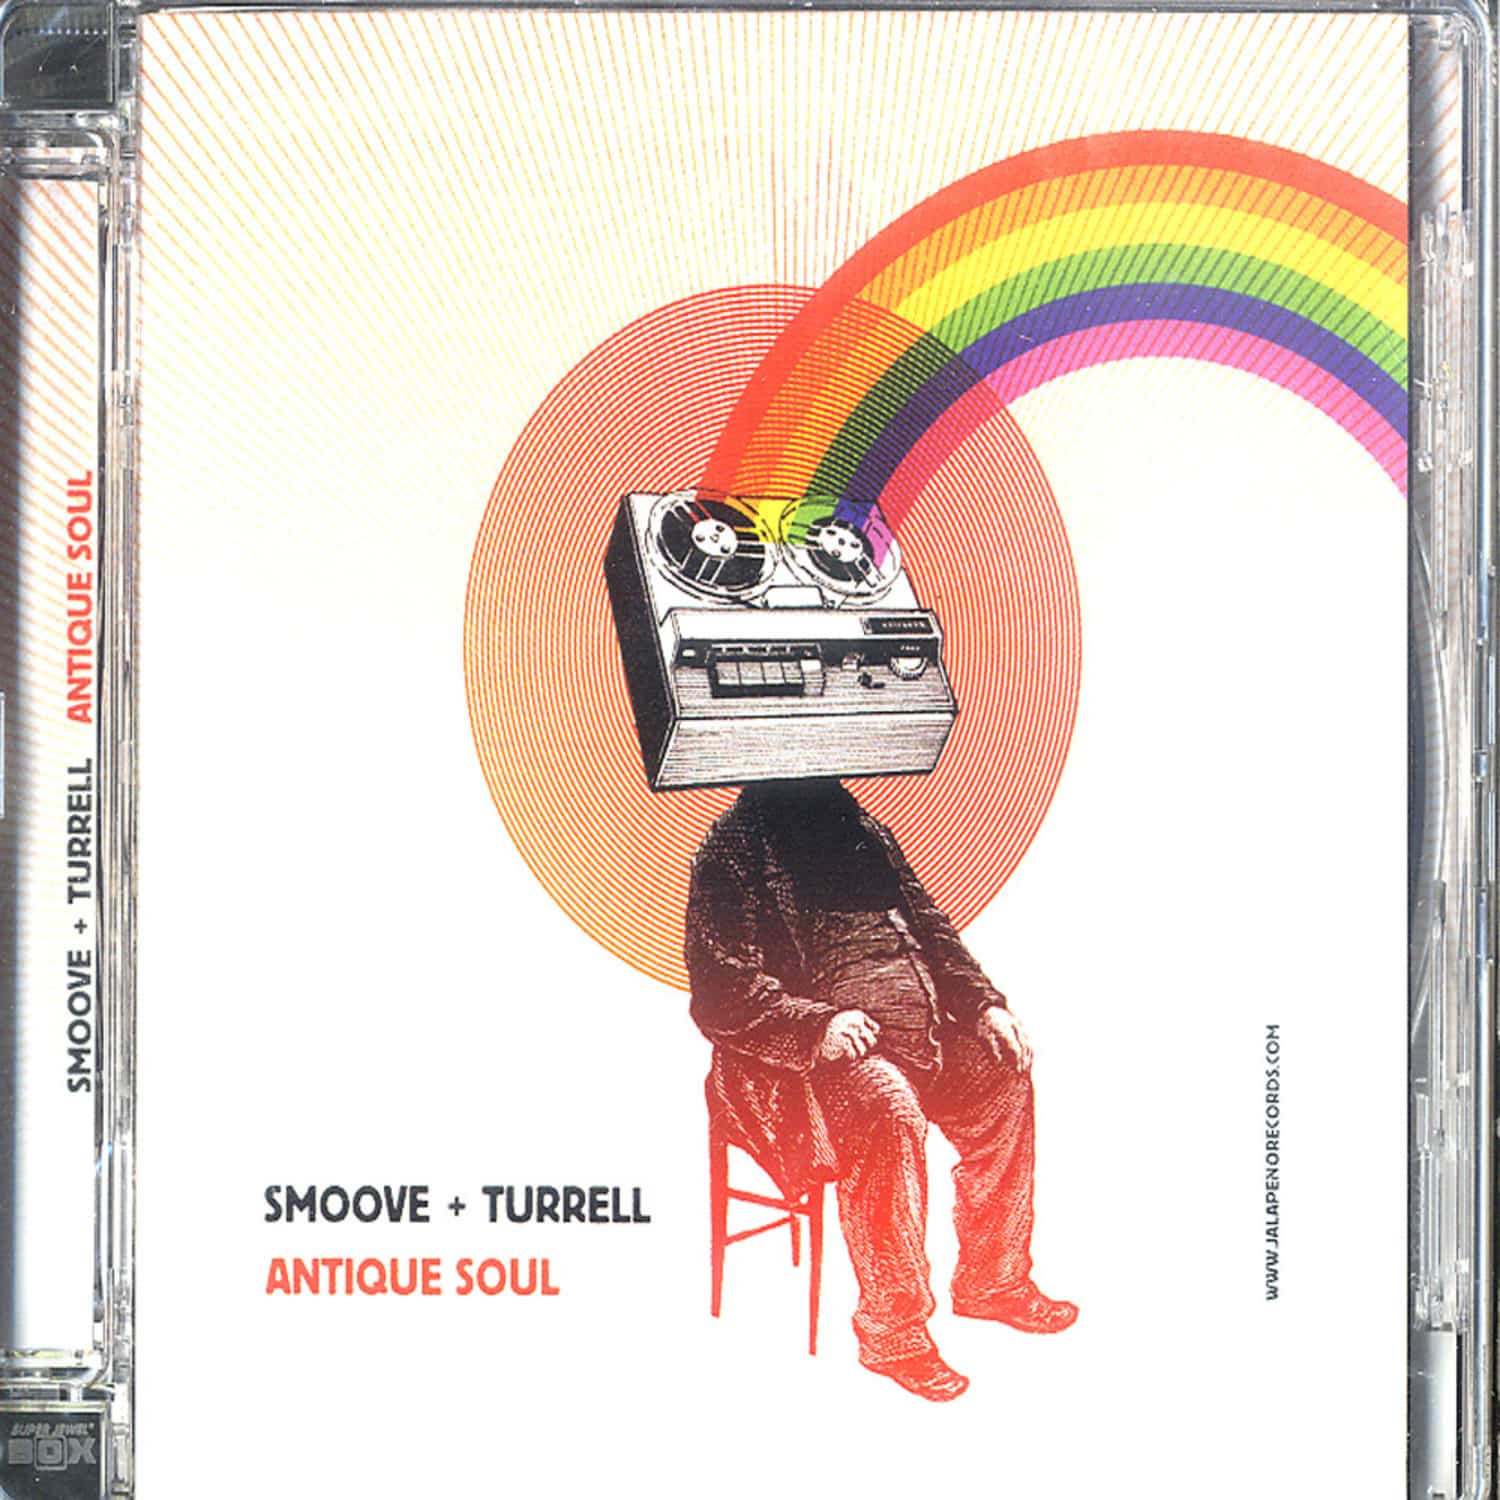 Smoove + Turrell - ANTIQUE SOUL 